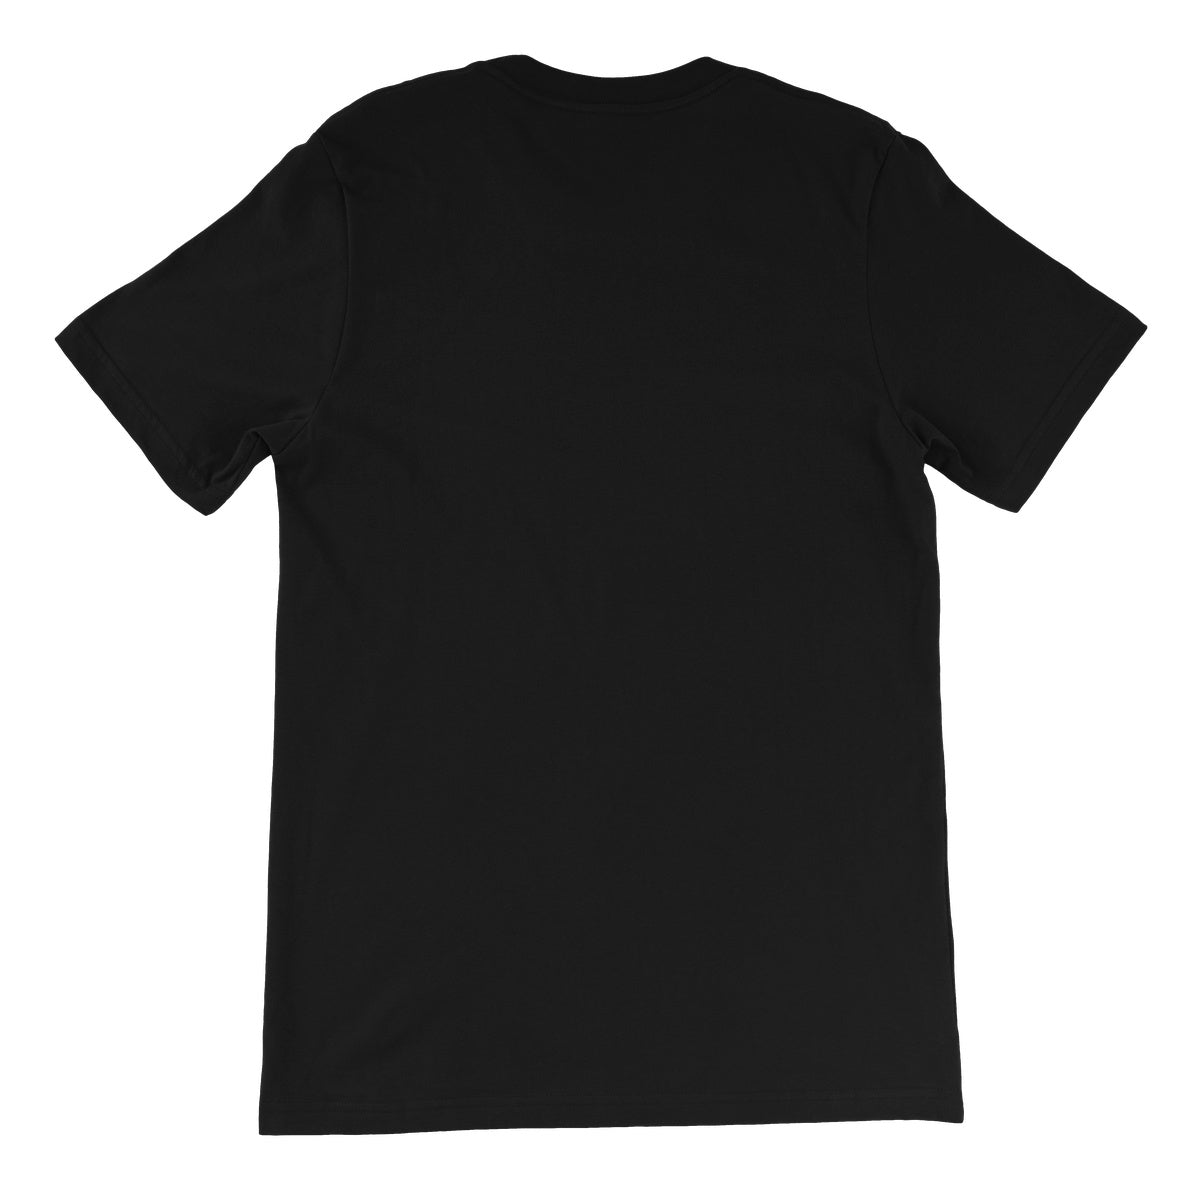 PCW UK TEN Unisex Short Sleeve T-Shirt